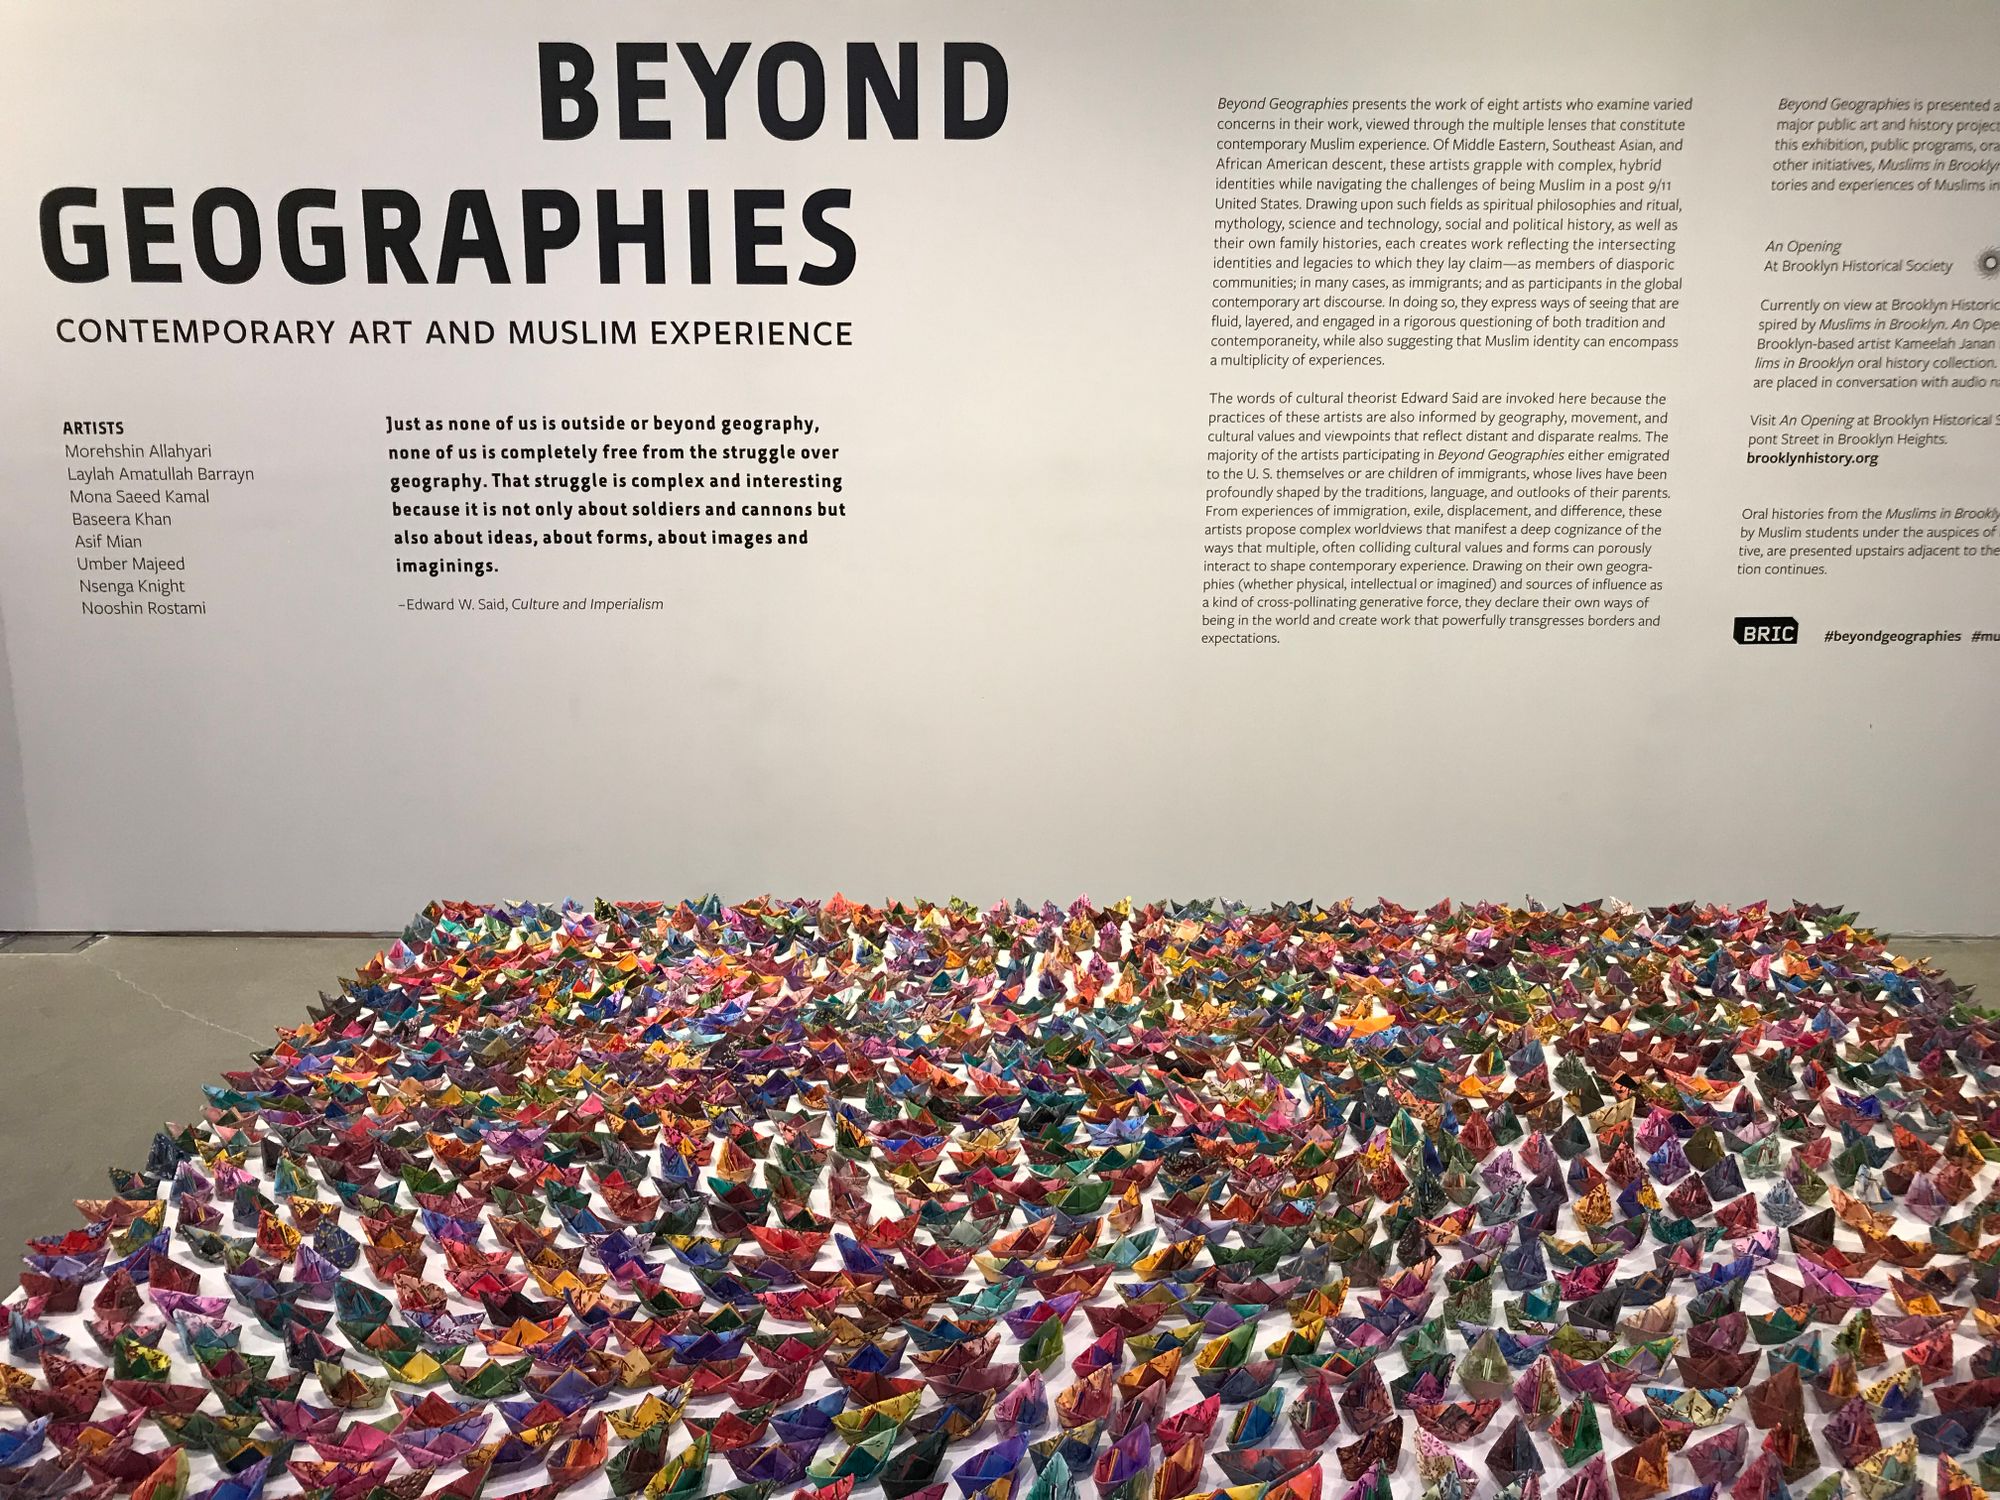 Beyond Geographies: 8 Artists Explore Contemporary Muslim Identity